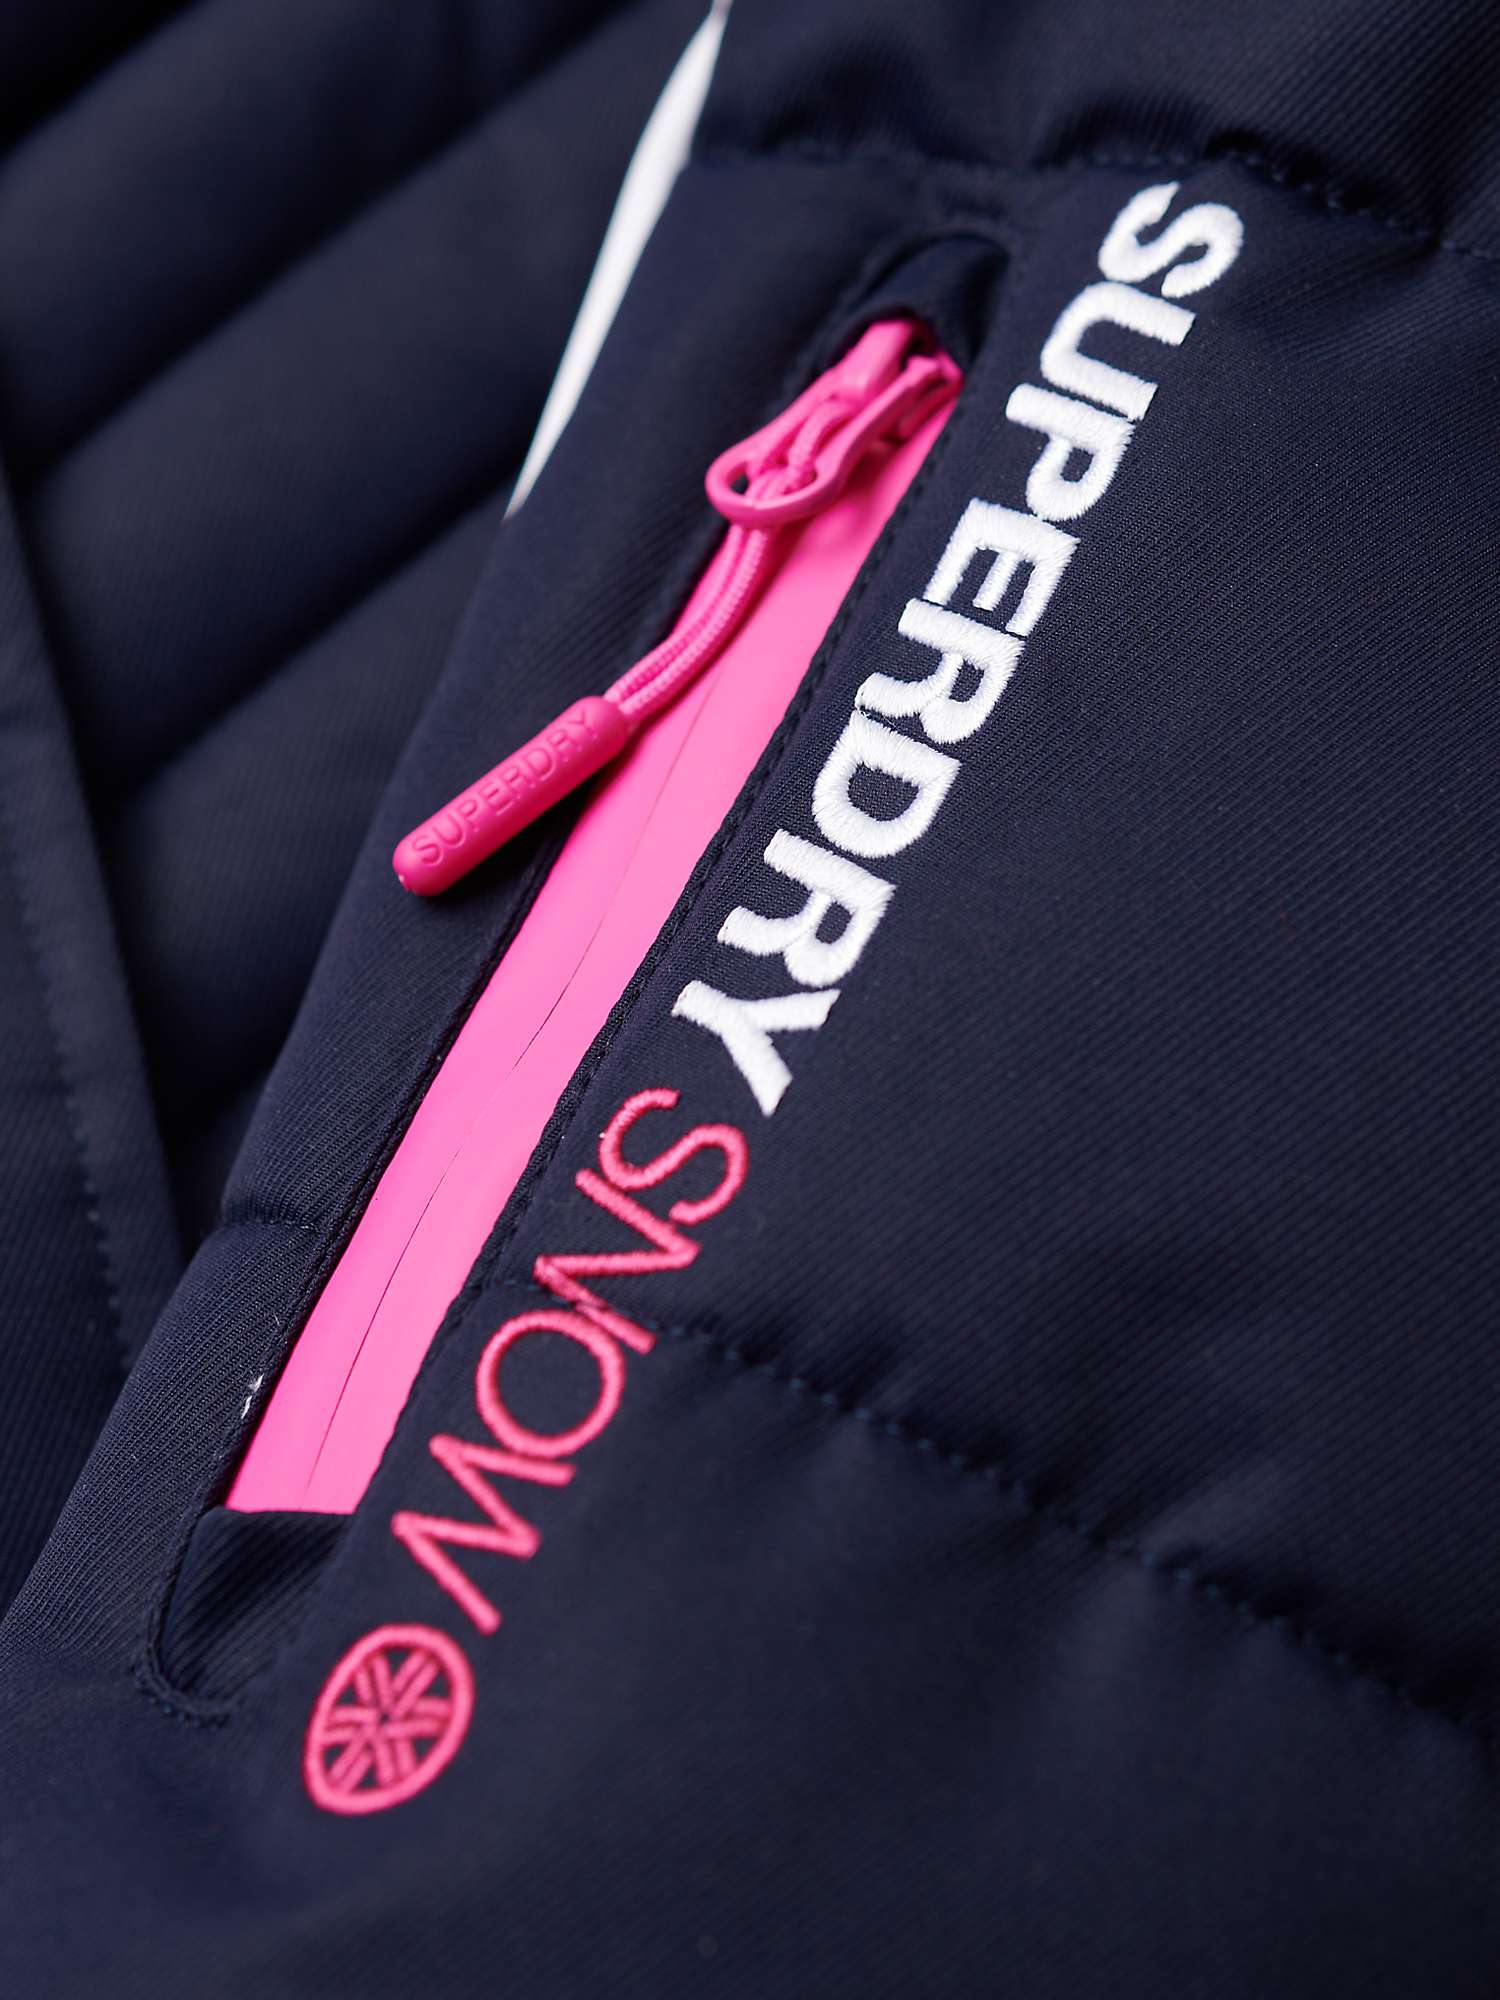 Buy Superdry Ski Luxe Women's Puffer Jacket, Rich Navy Online at johnlewis.com